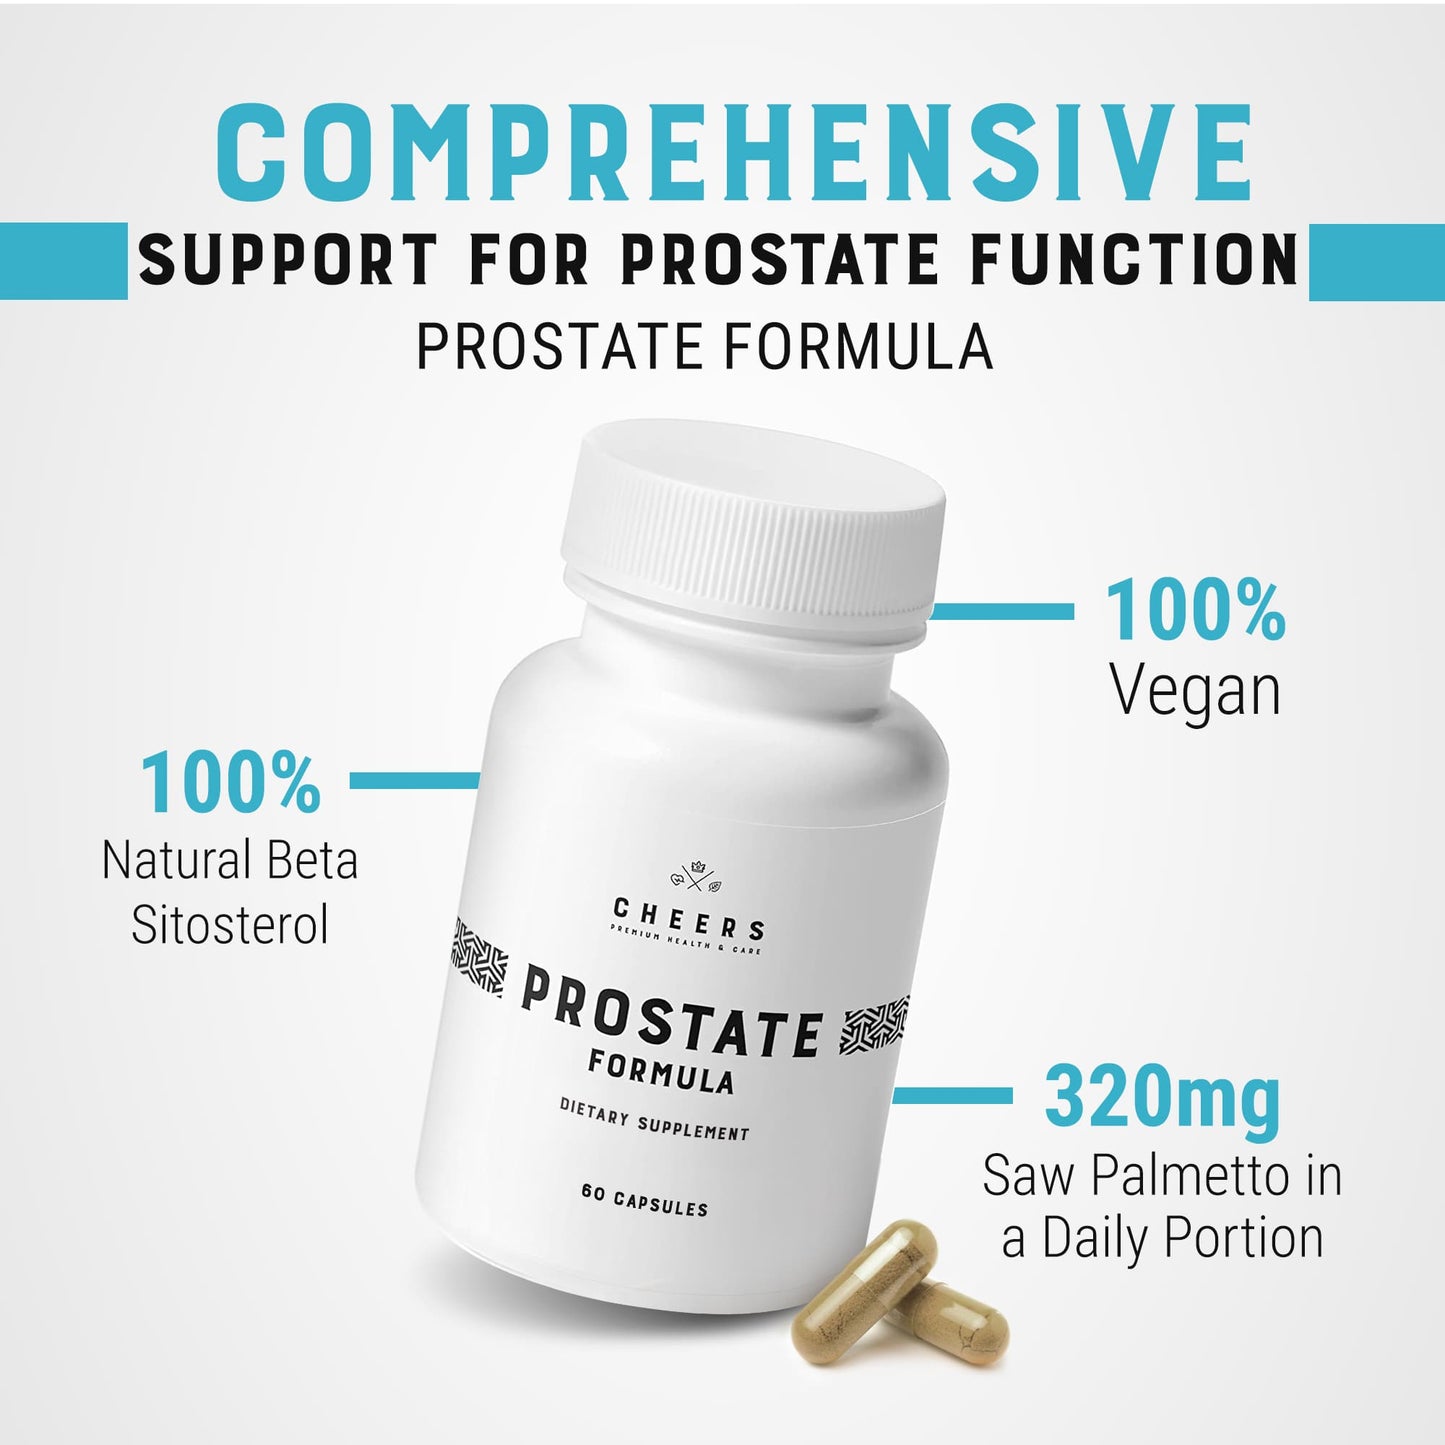 Prostate Support Formula (60 caps)